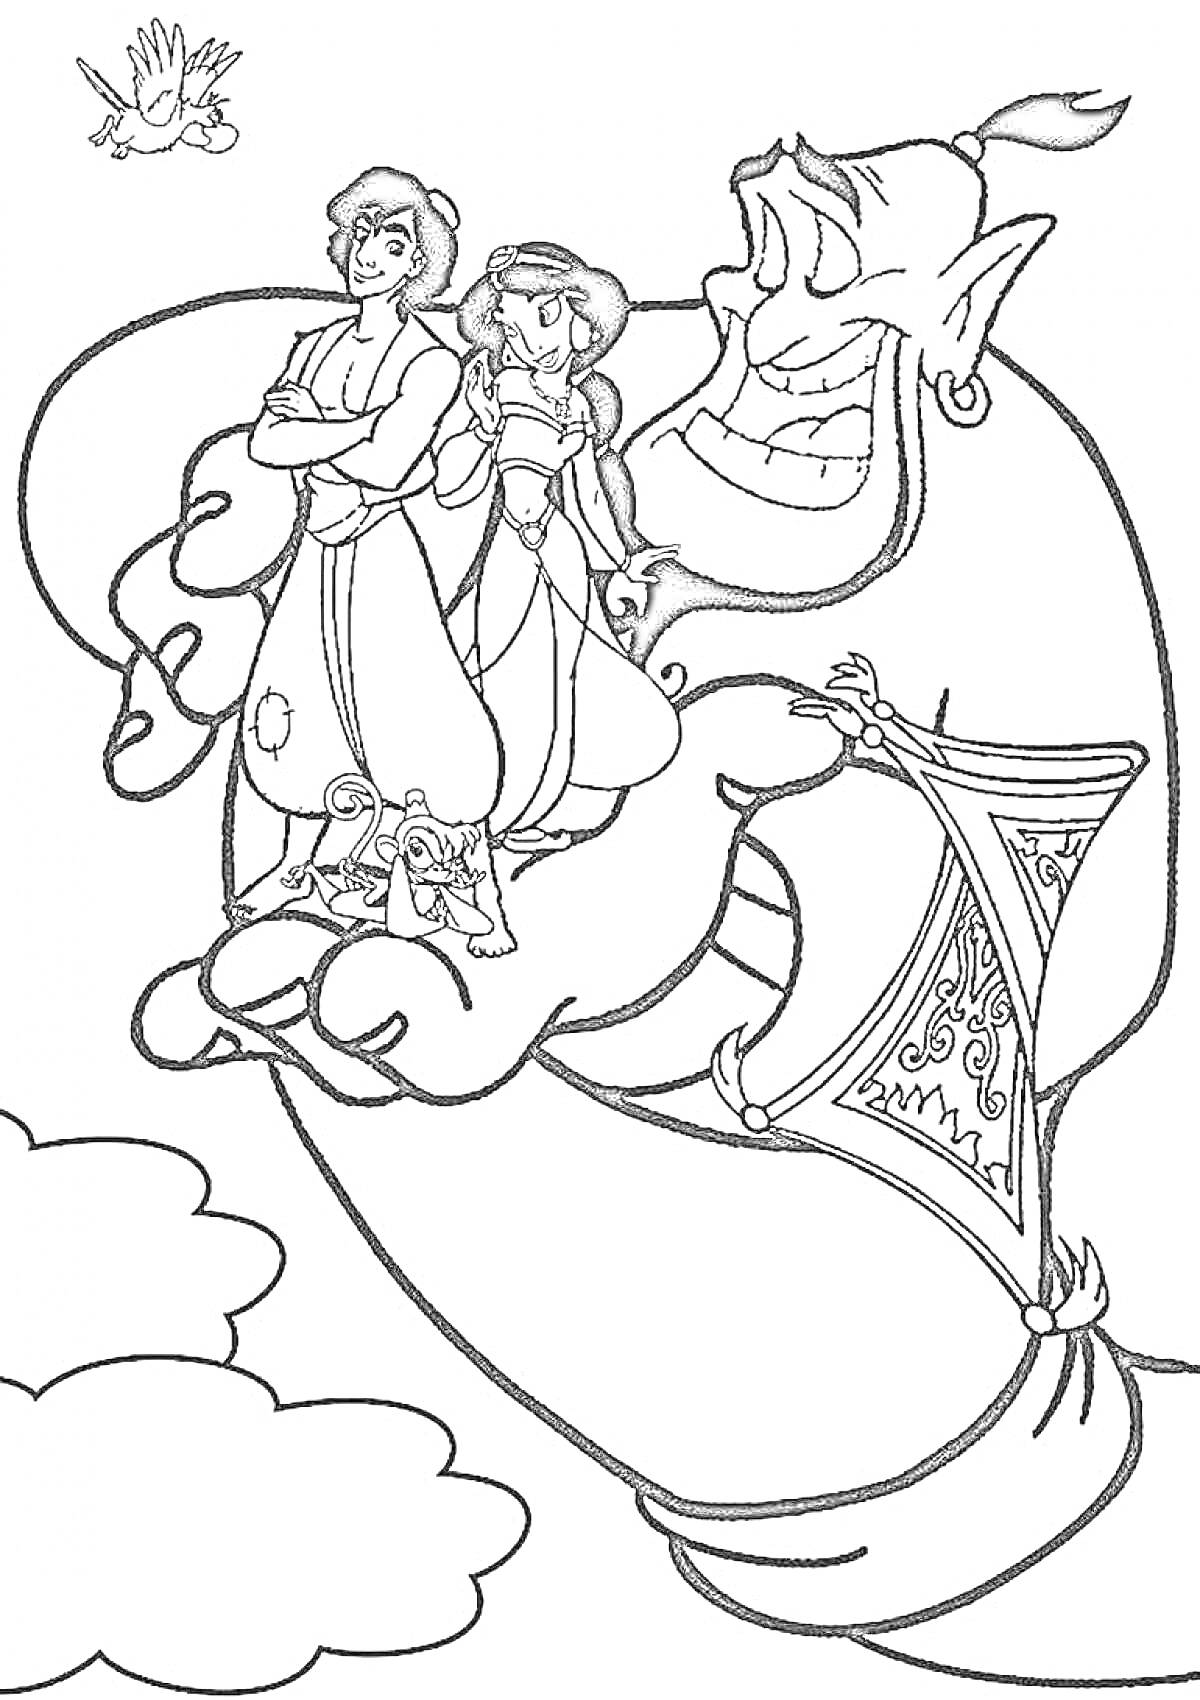 Раскраска Алладин и Жасмин стоят на руке Джинна с ковром-самолетом, птица летит в небе